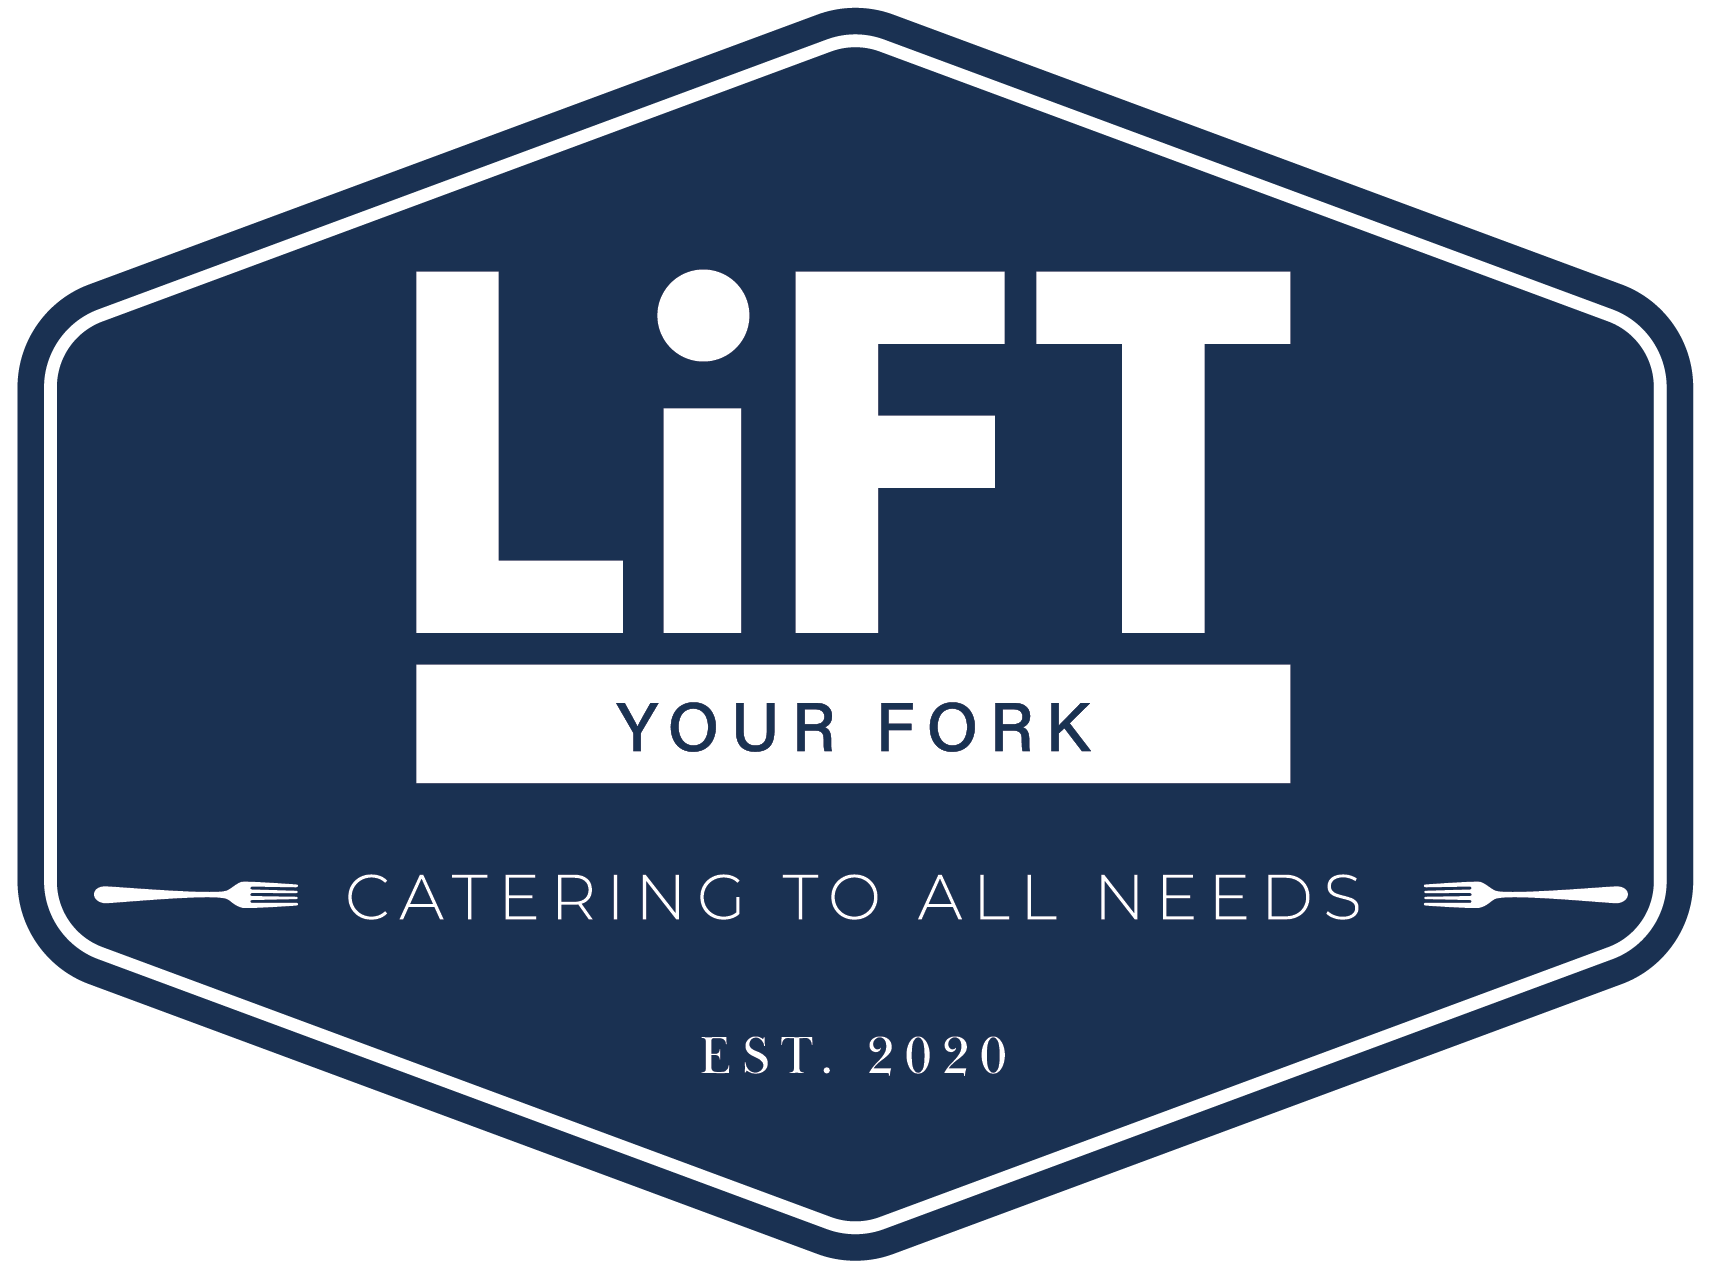 SVG Vector version of LiFT Your Fork Logo in dark brand blue